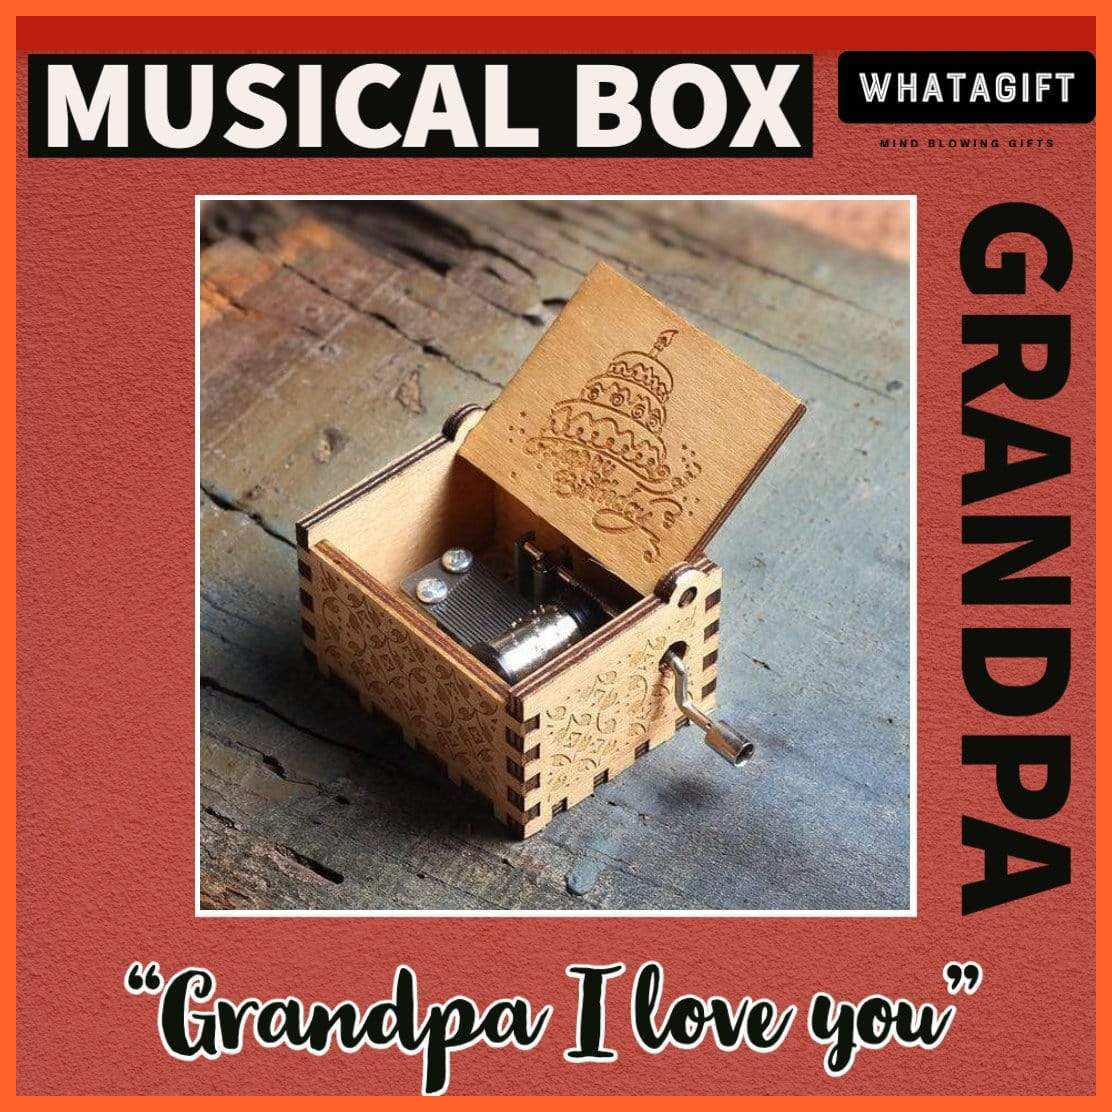 Wooden Classical Music Box Grandpa I Love You | whatagift.com.au.